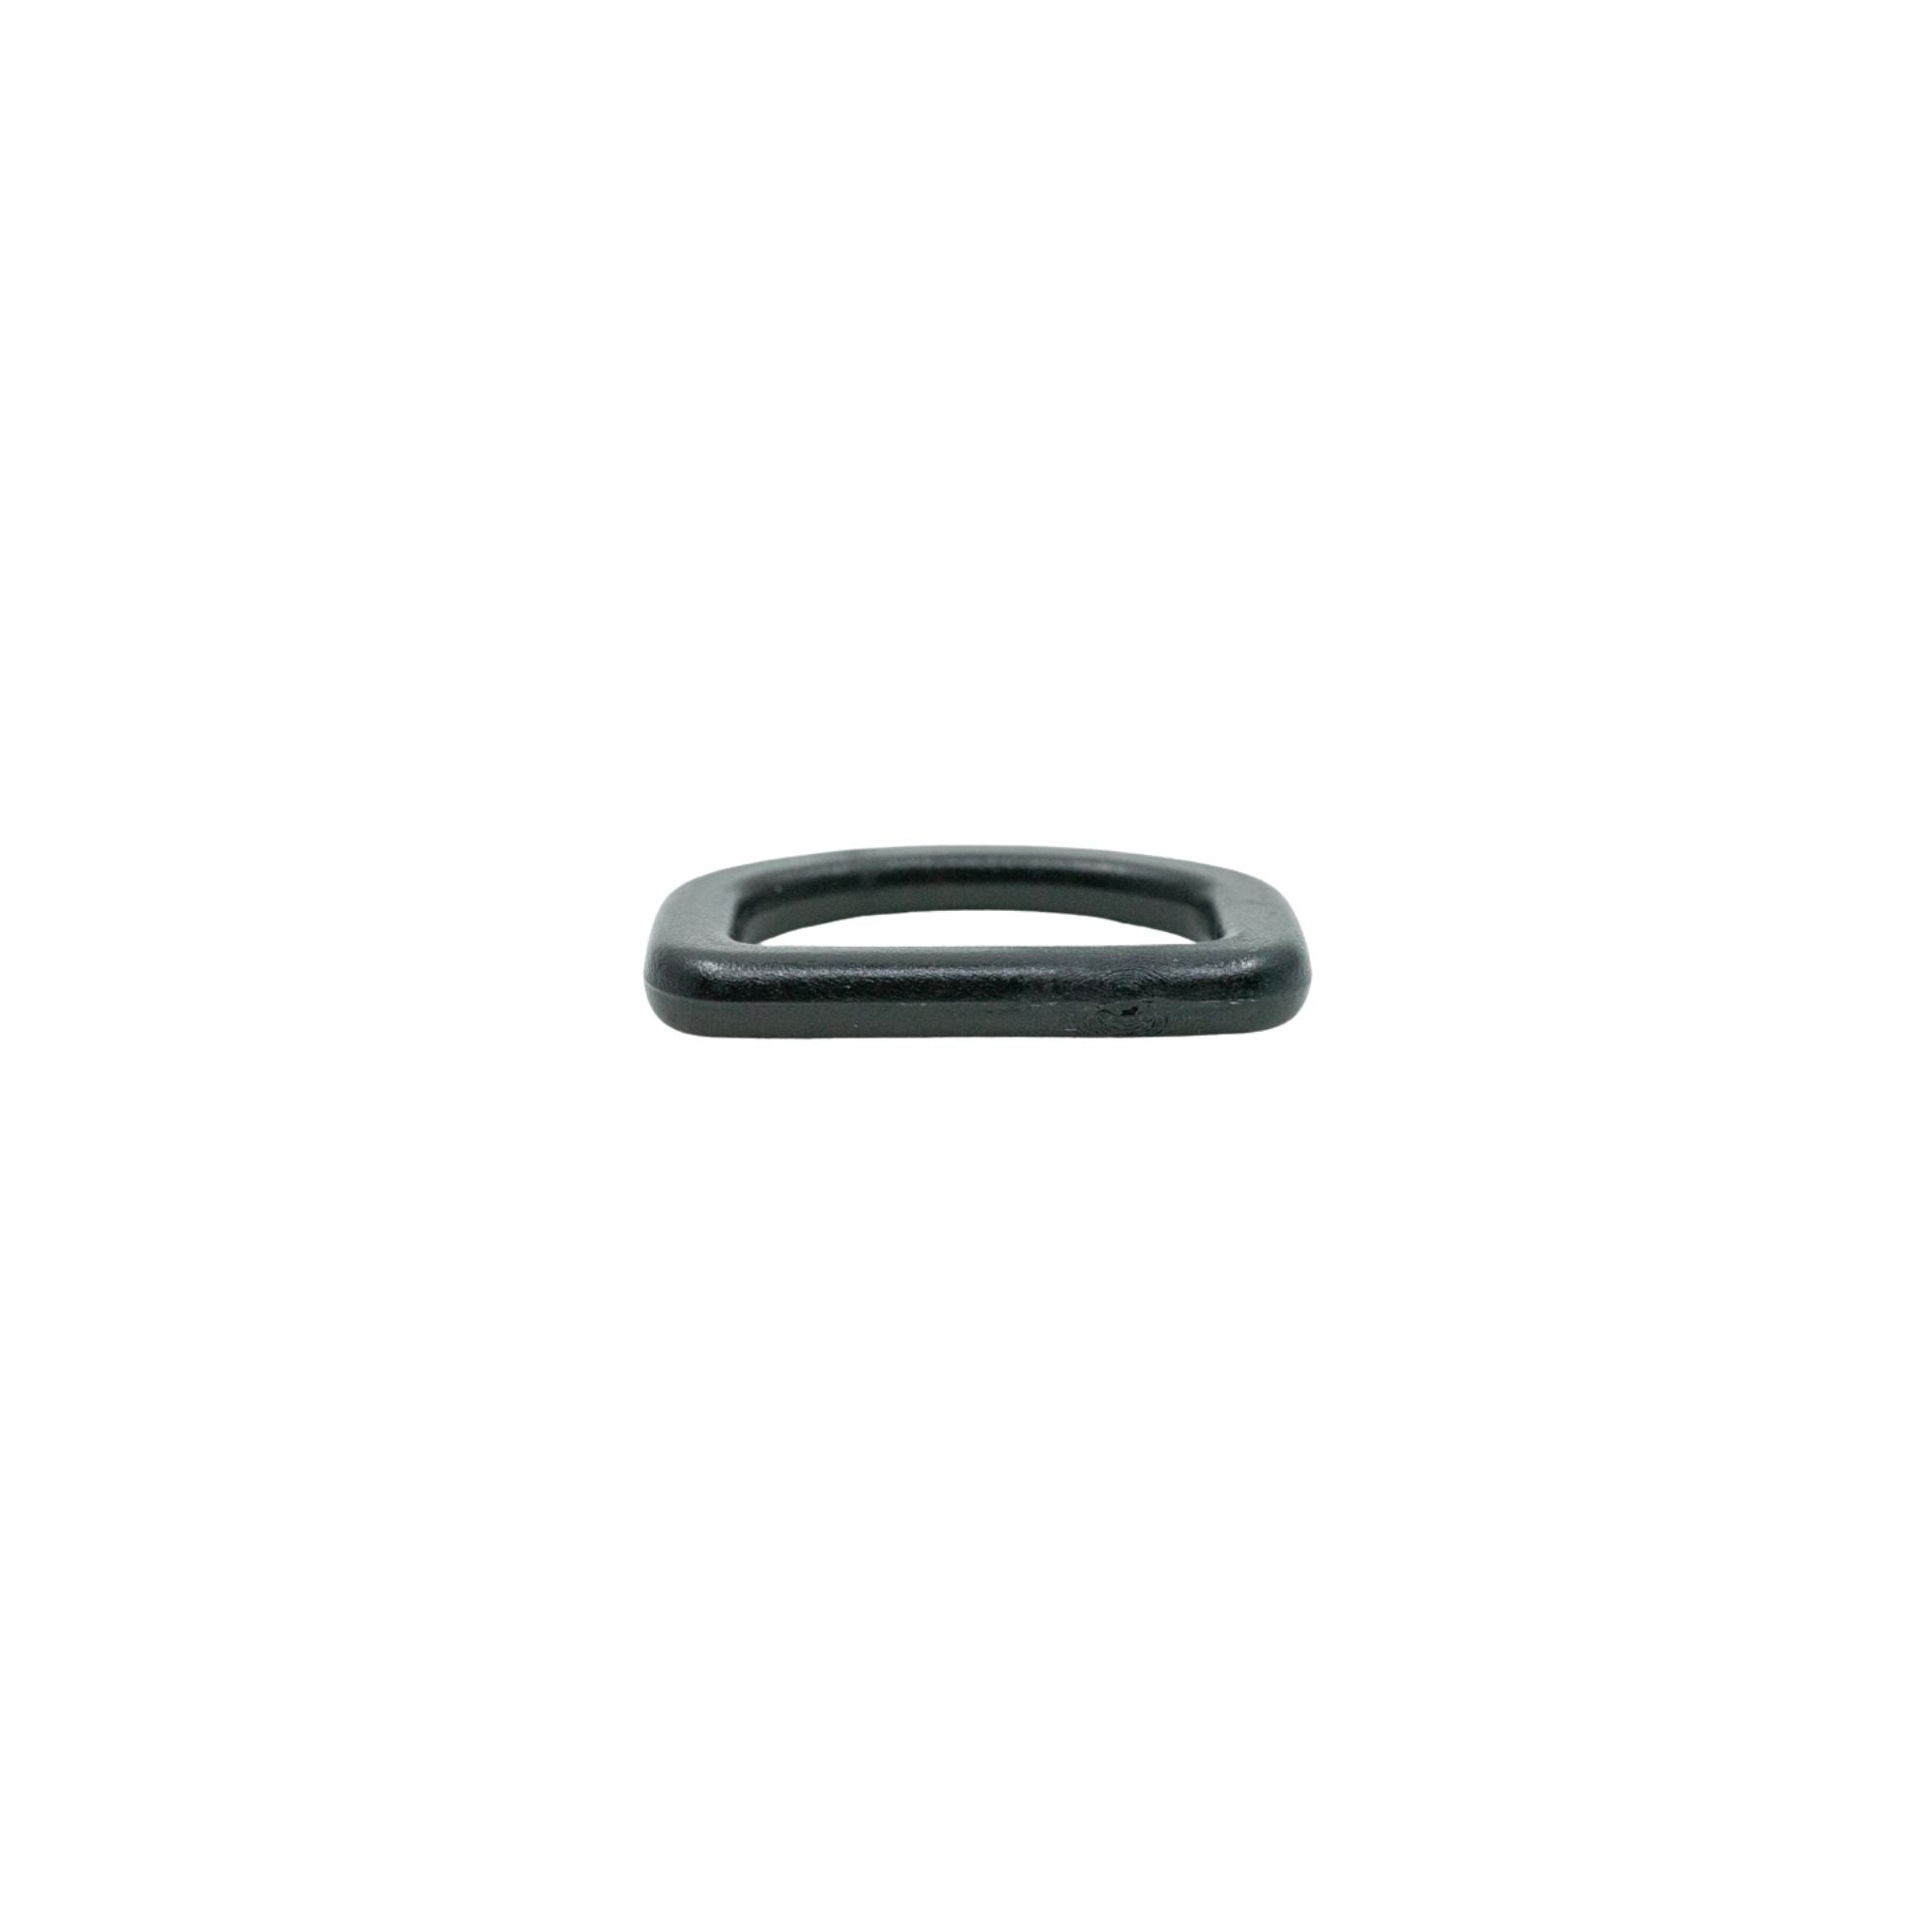 1 Inch Plastic D-Ring Black